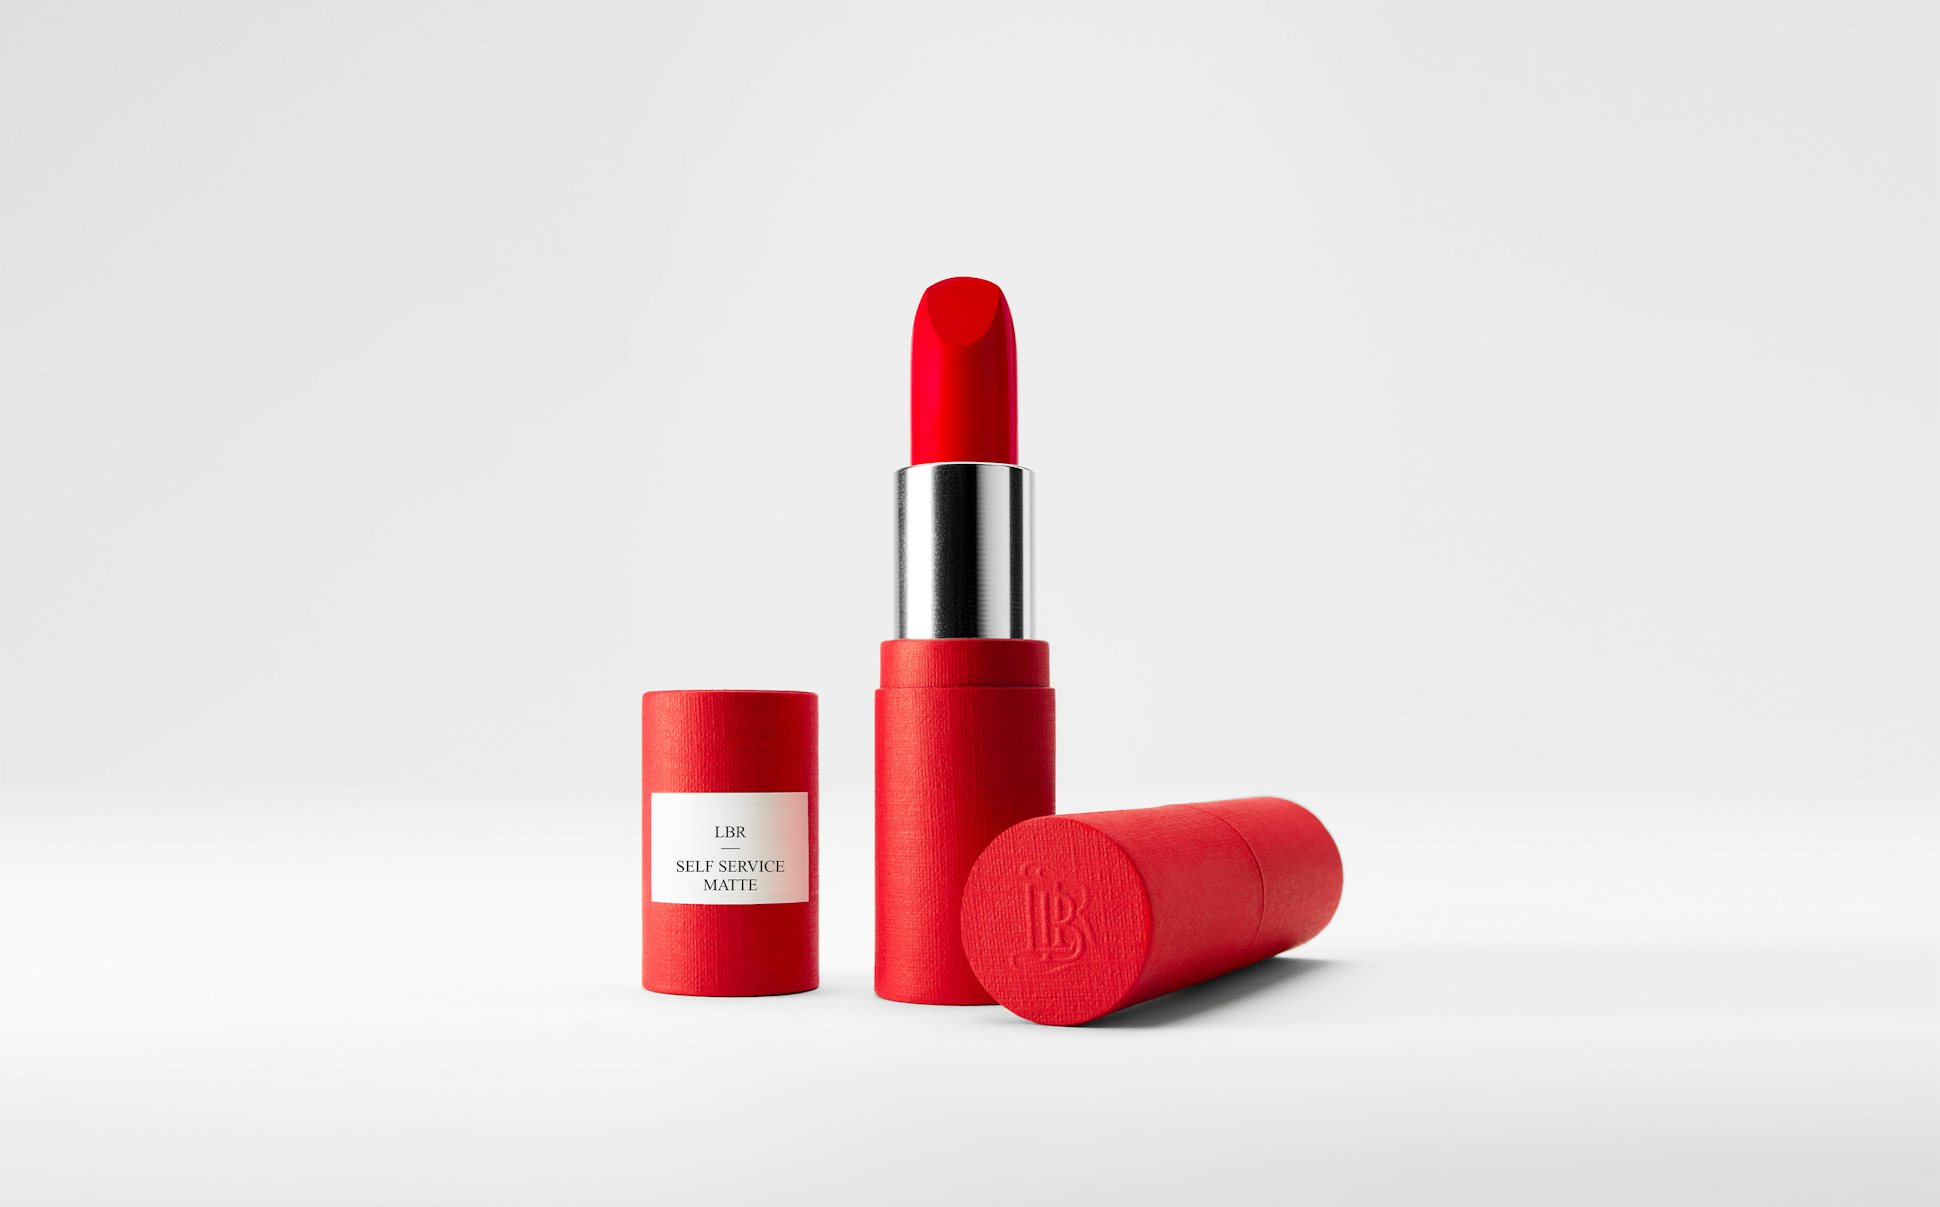 La bouche rouge Le Rouge Self Service Matte lipstick in the red paper case